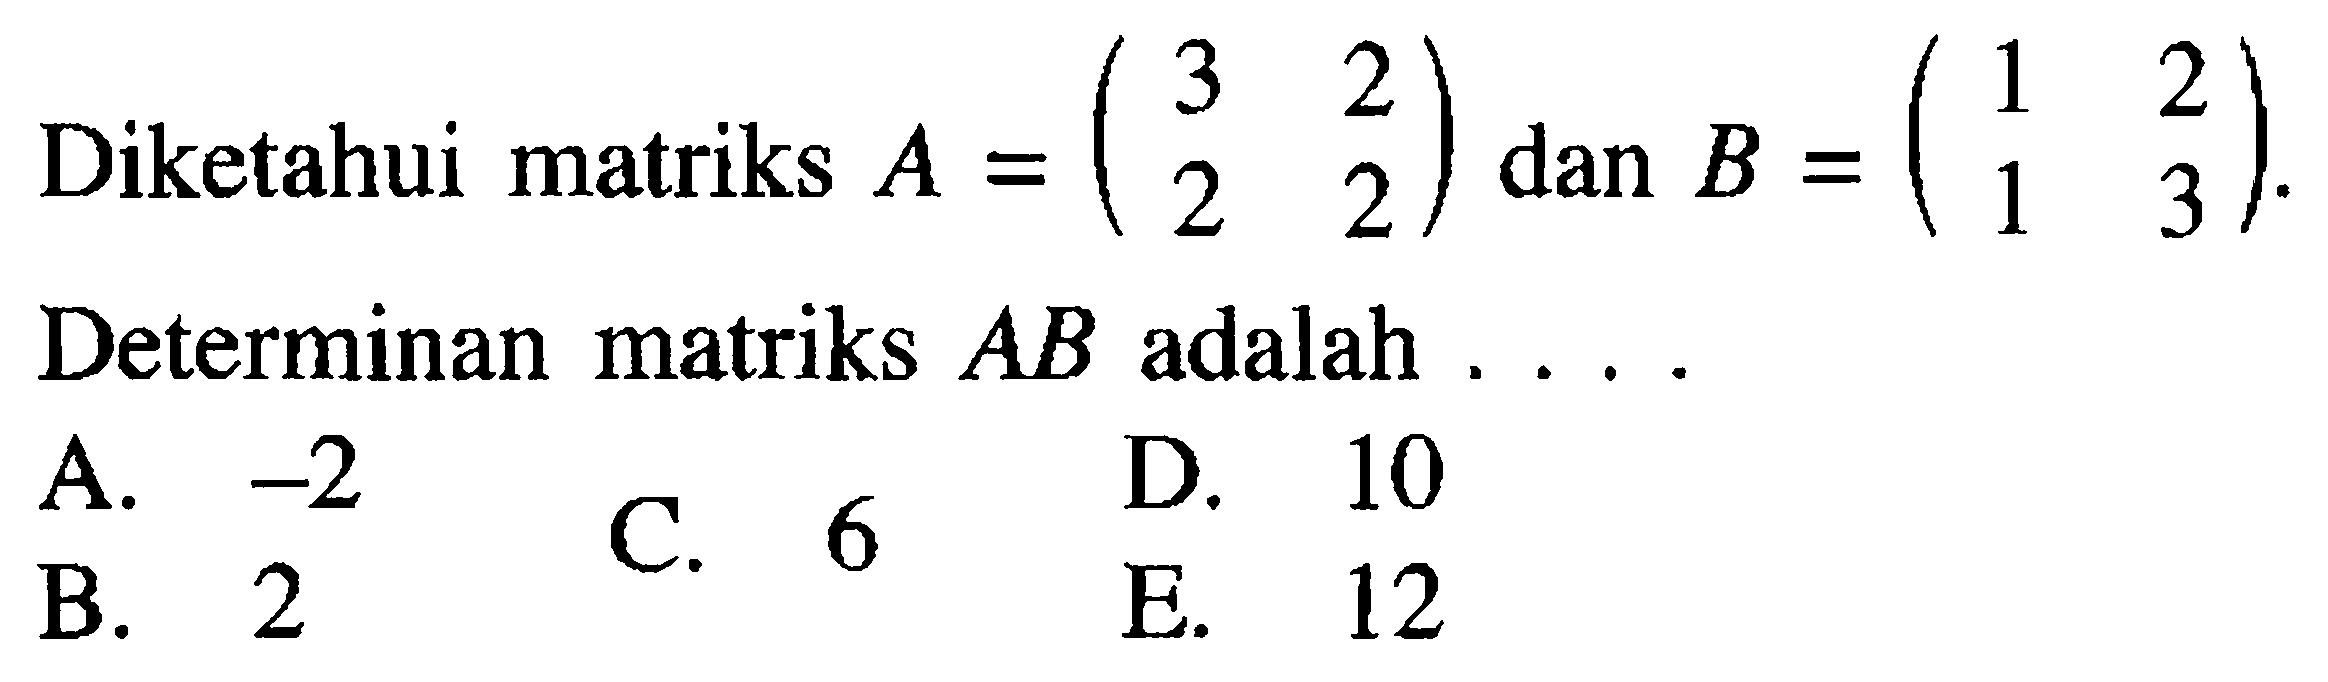 Diketahui matriks A = (3 2 2 2) dan B = (1 2 1 3). Determinan matriks AB adalah ....